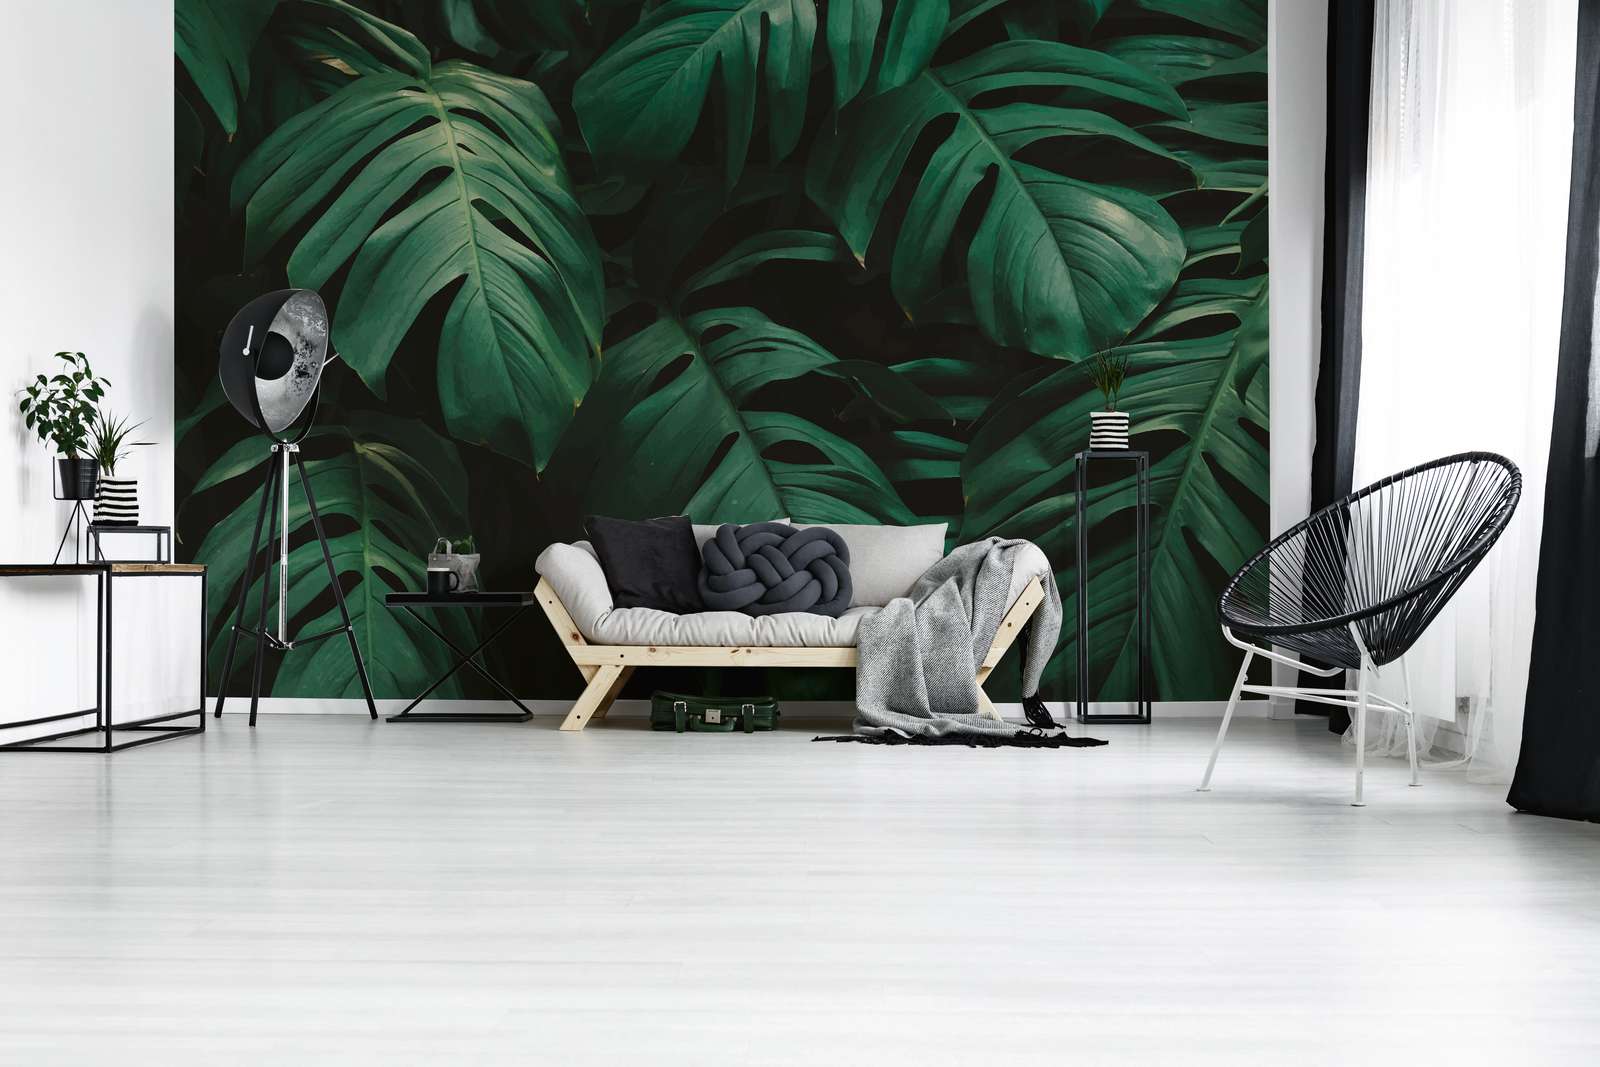             Tropical Jungle Leaves Close-Up Wallpaper - Green
        